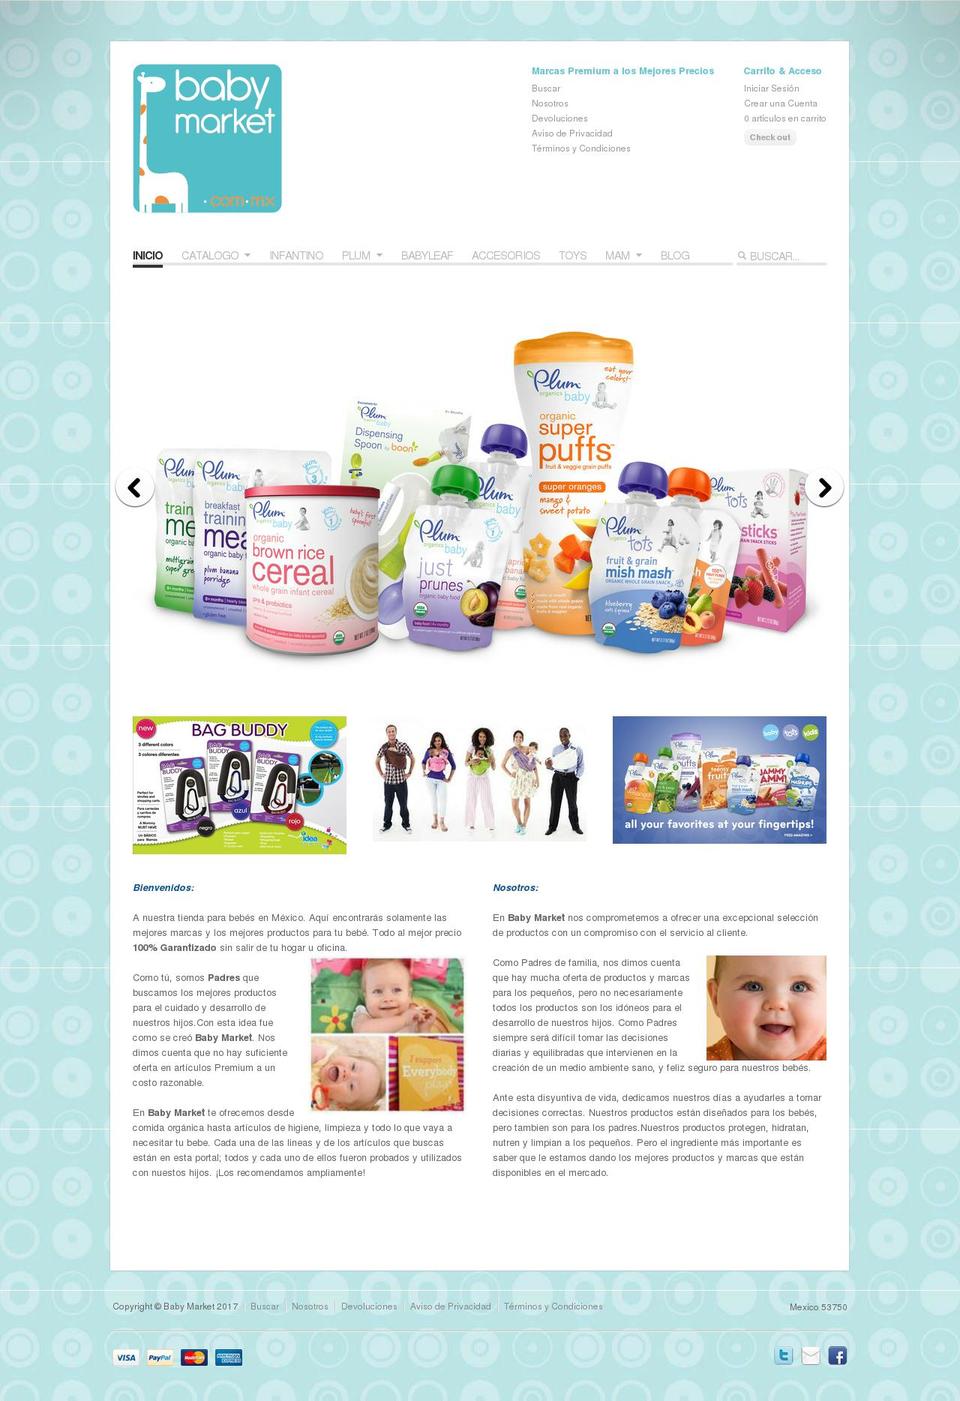 babymarket.com.mx shopify website screenshot